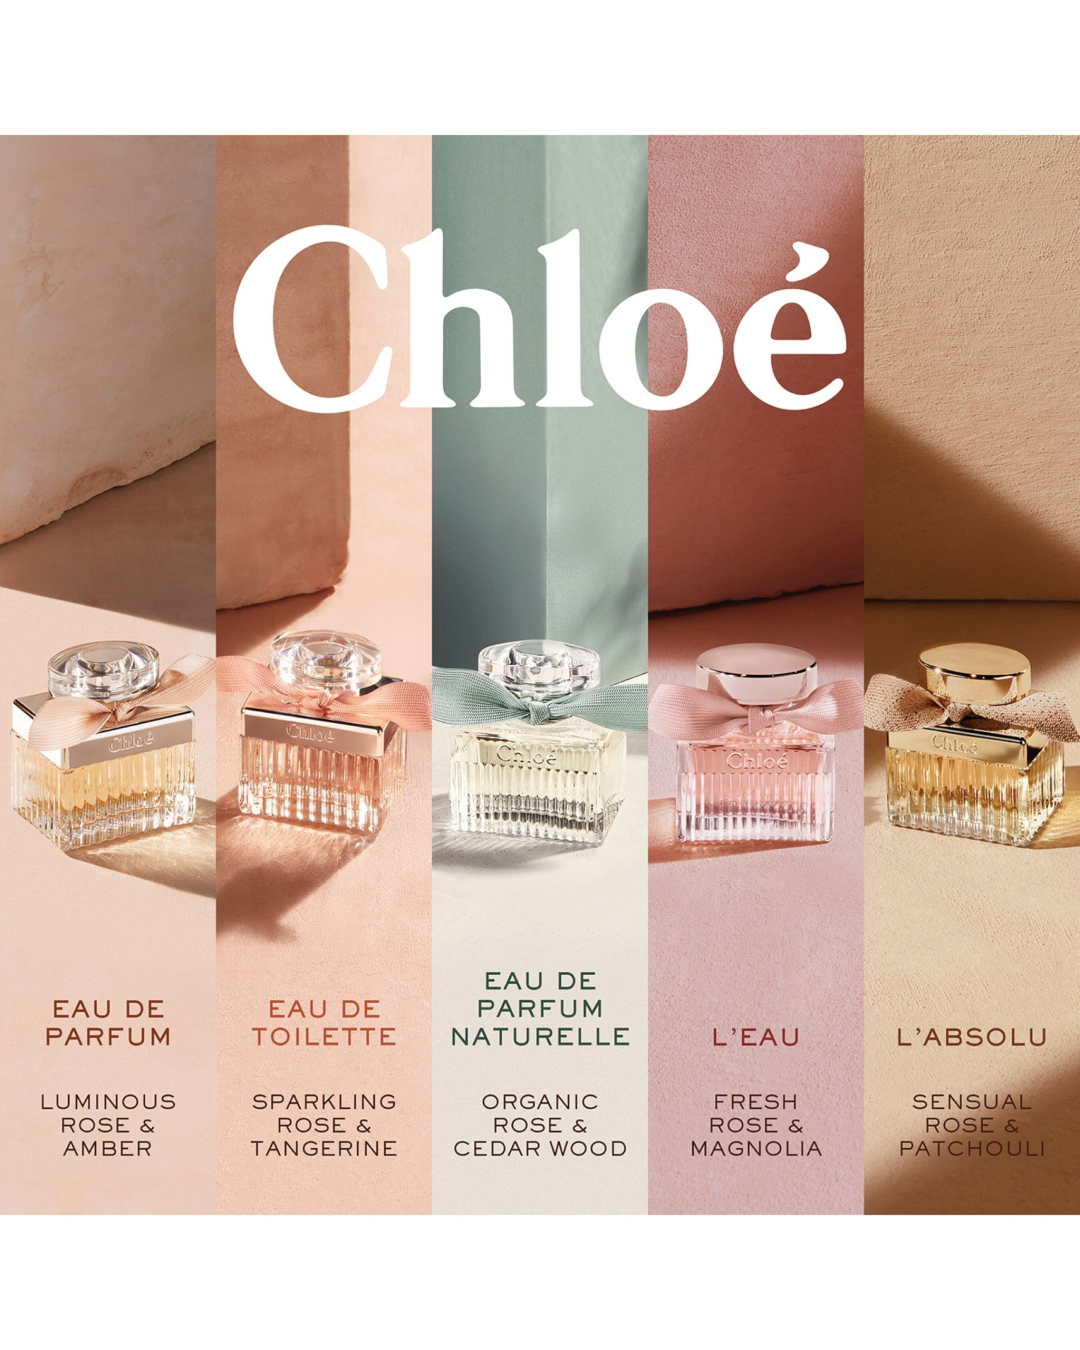 Chloe Chloe Eau de Parfum Travel Vial (1.2ml x 3) - Best Buy World Philippines